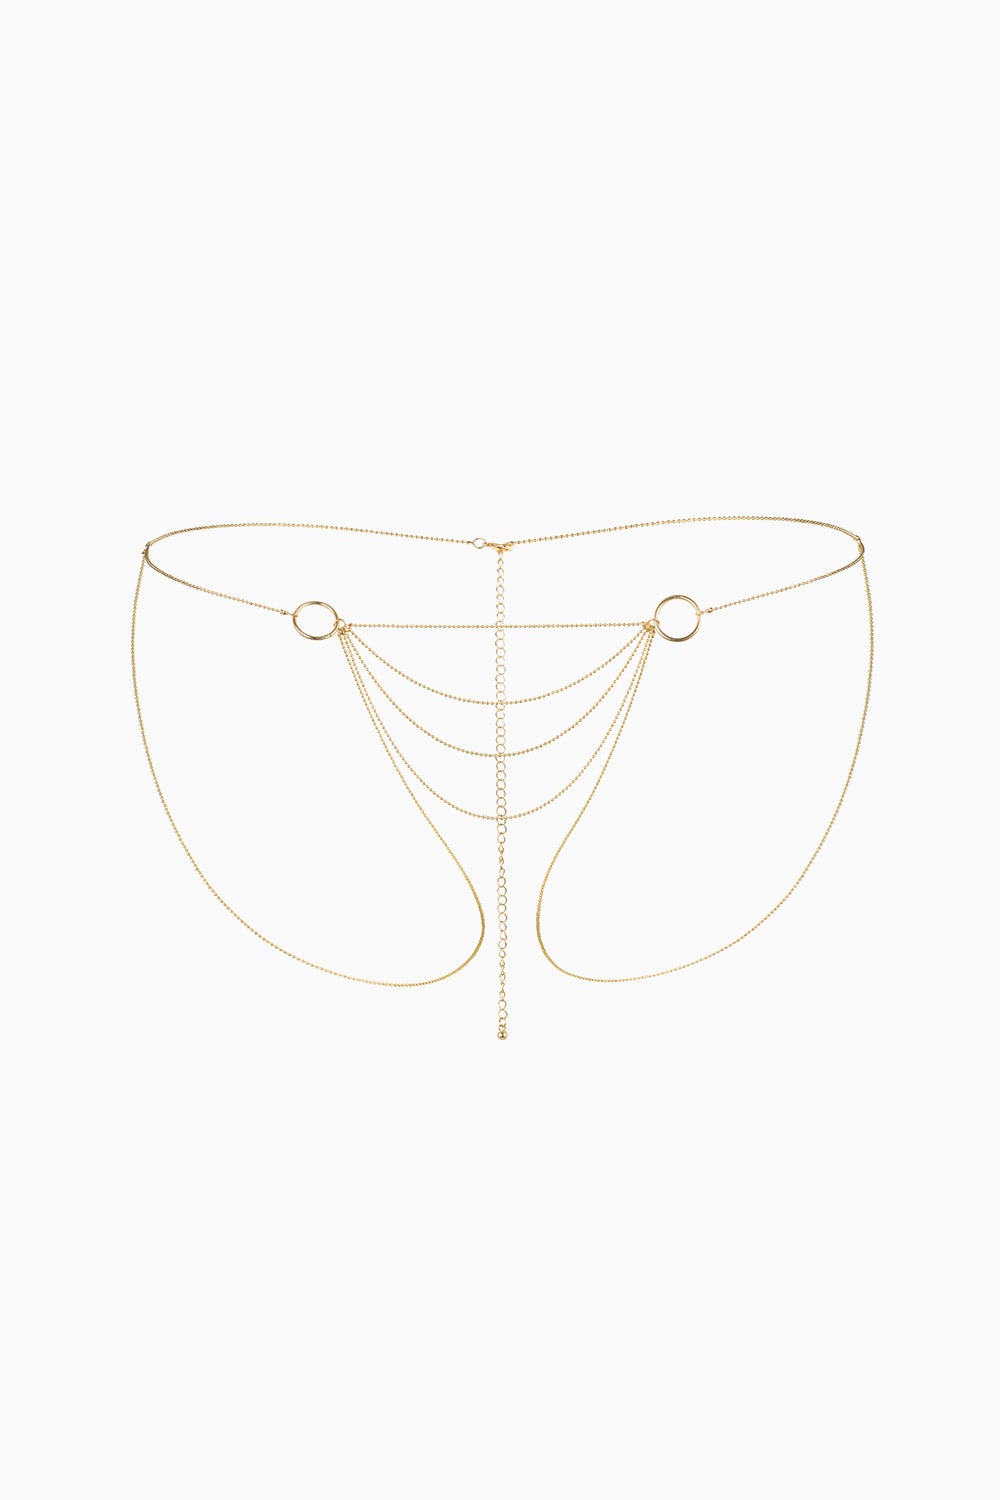 Bijoux Indiscrets Magnifique Bikini Chain Gold